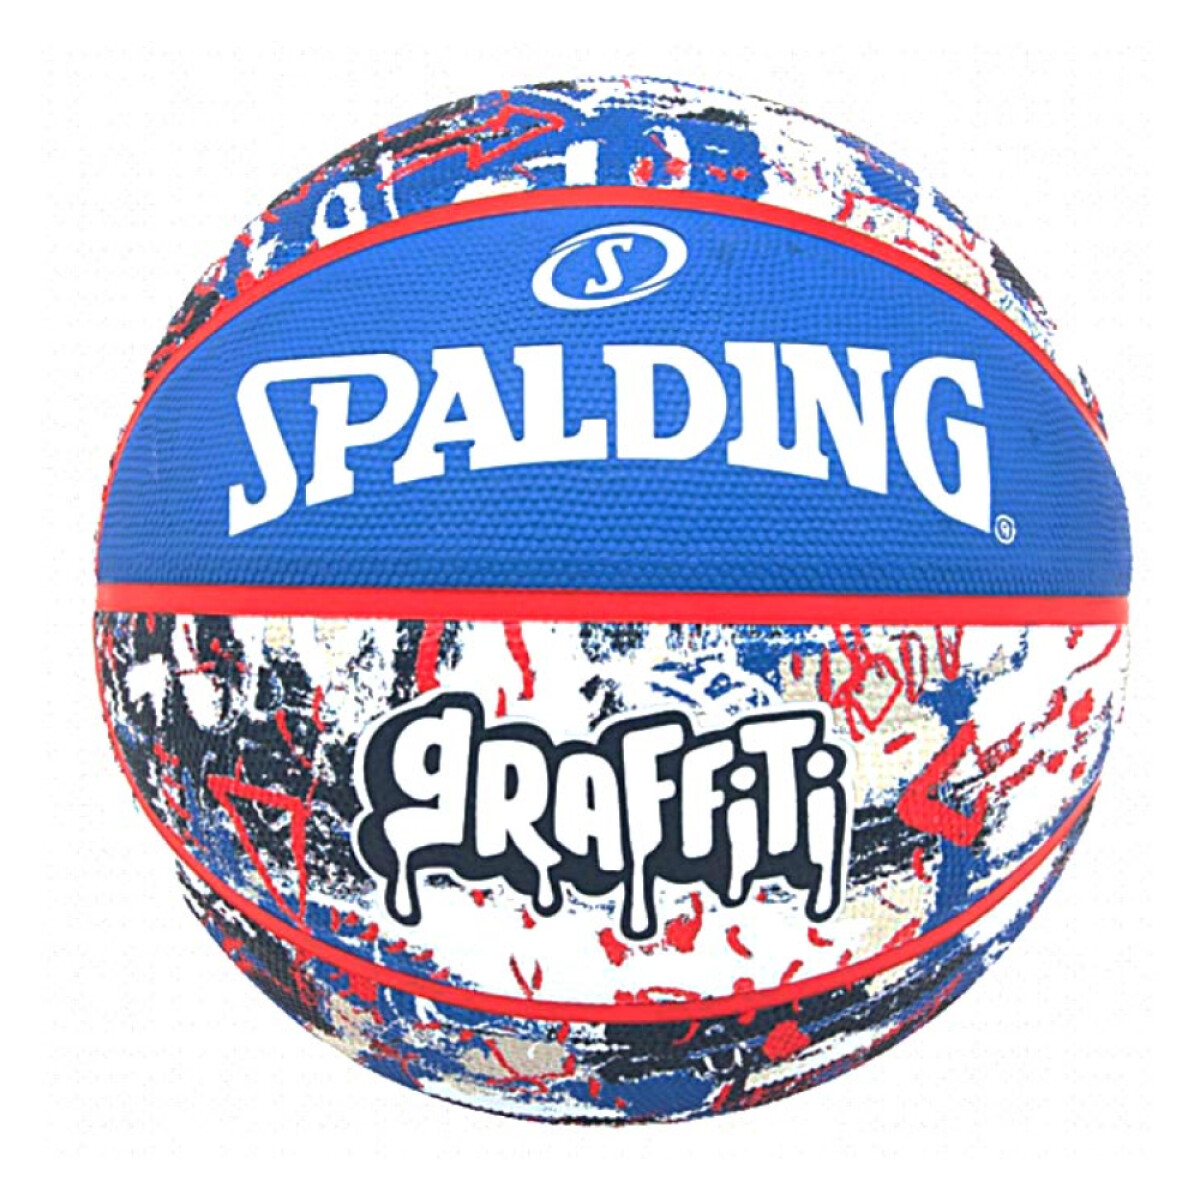 Pelota Basket Spalding Profesional - Graffiti Azul y Roja Nº7 